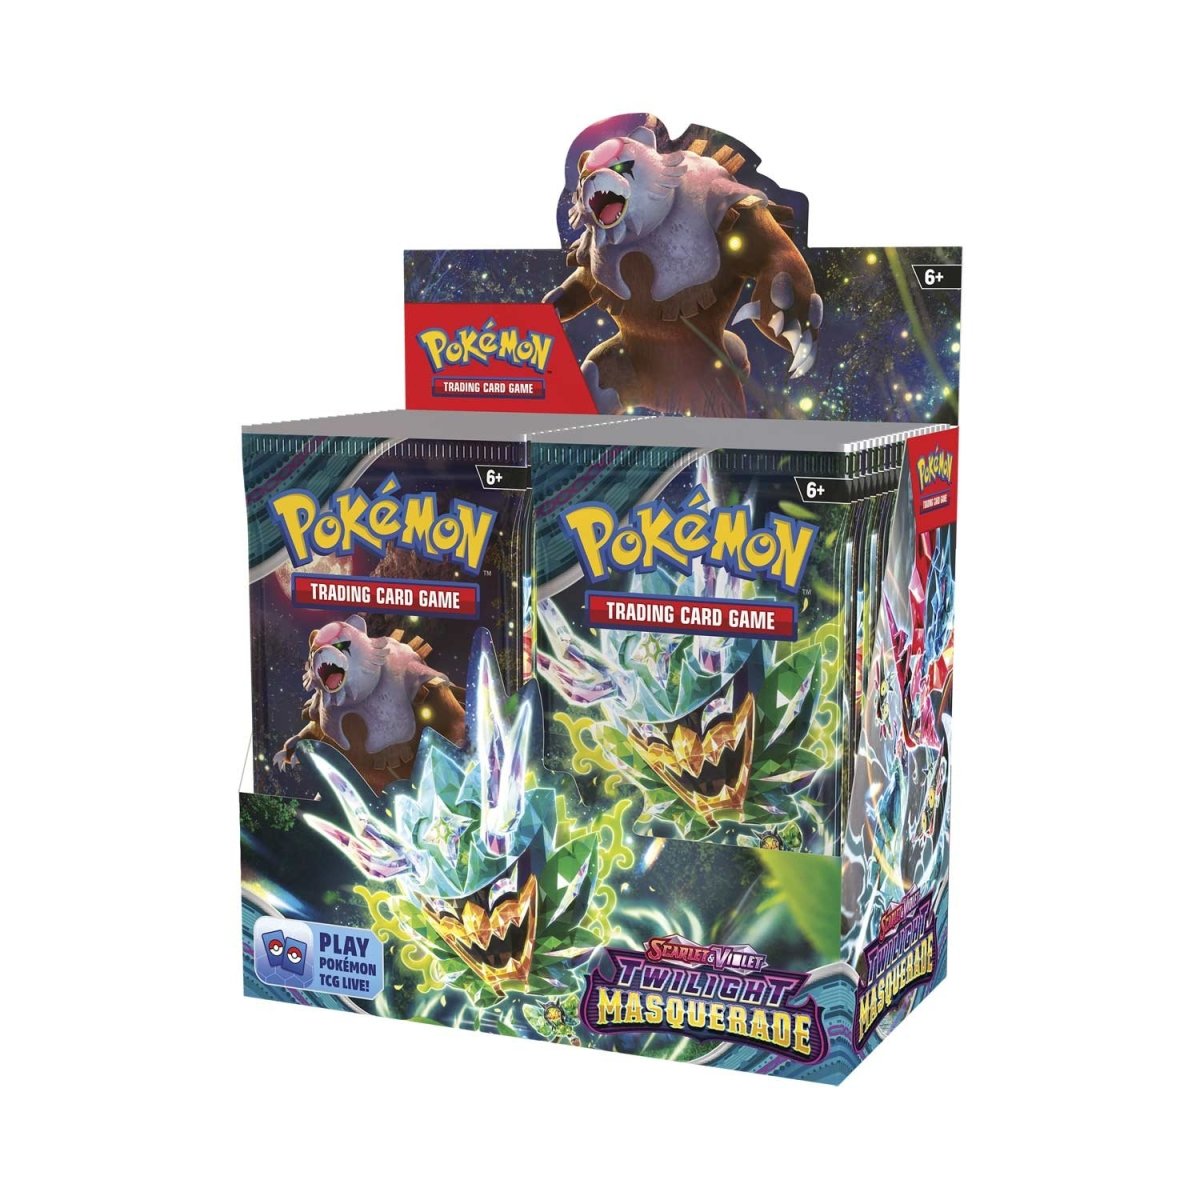 Pokemon Booster Box (36 Packs) - Scarlet & Violet - Twilight Masquerade